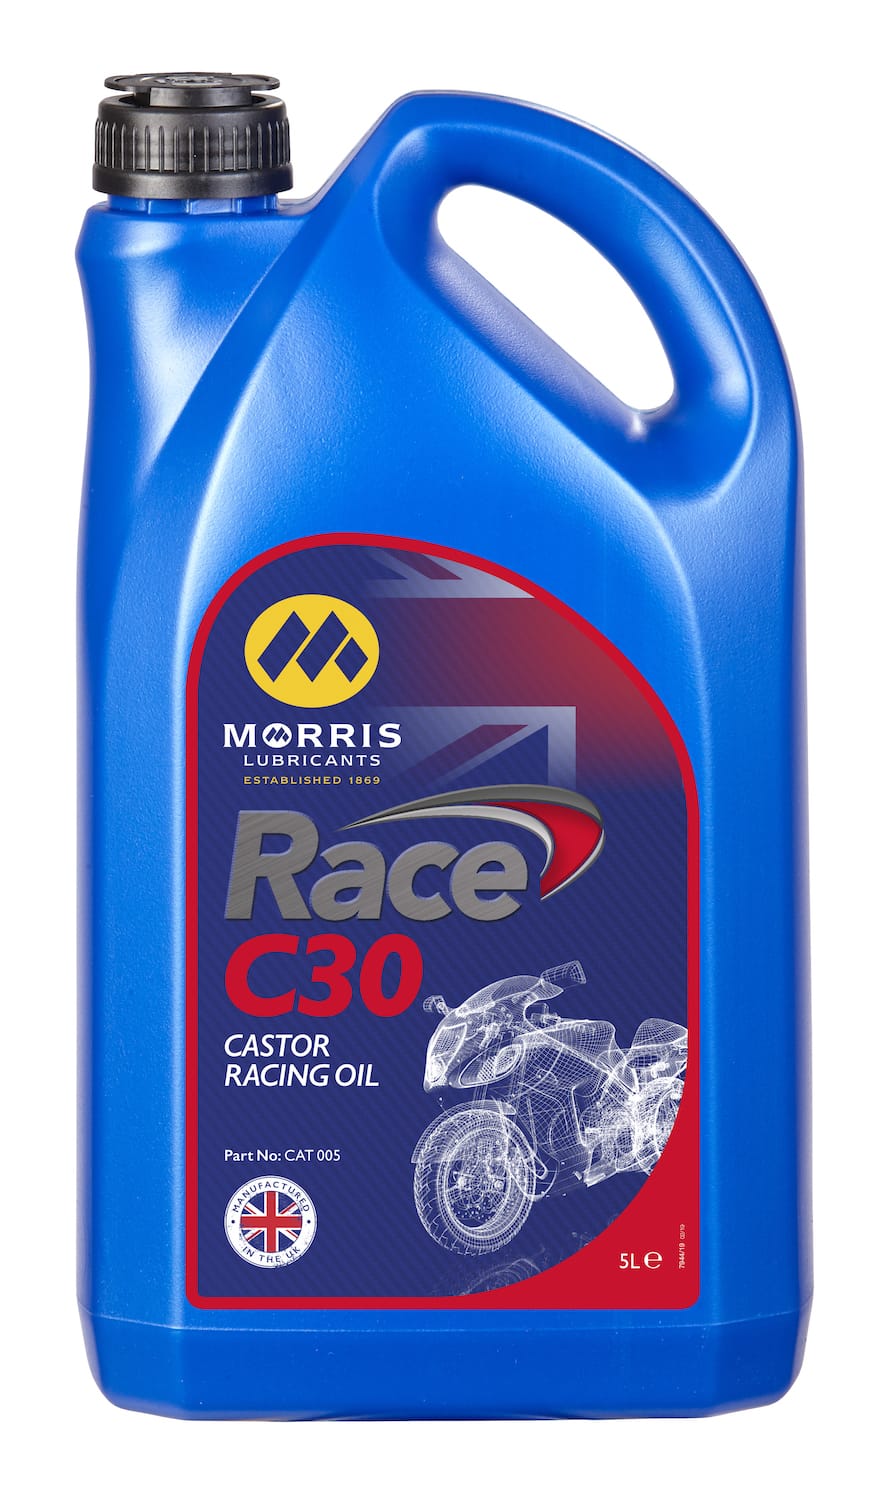 Race C30 (Formerly MLR 30 Castor Racing Oil)